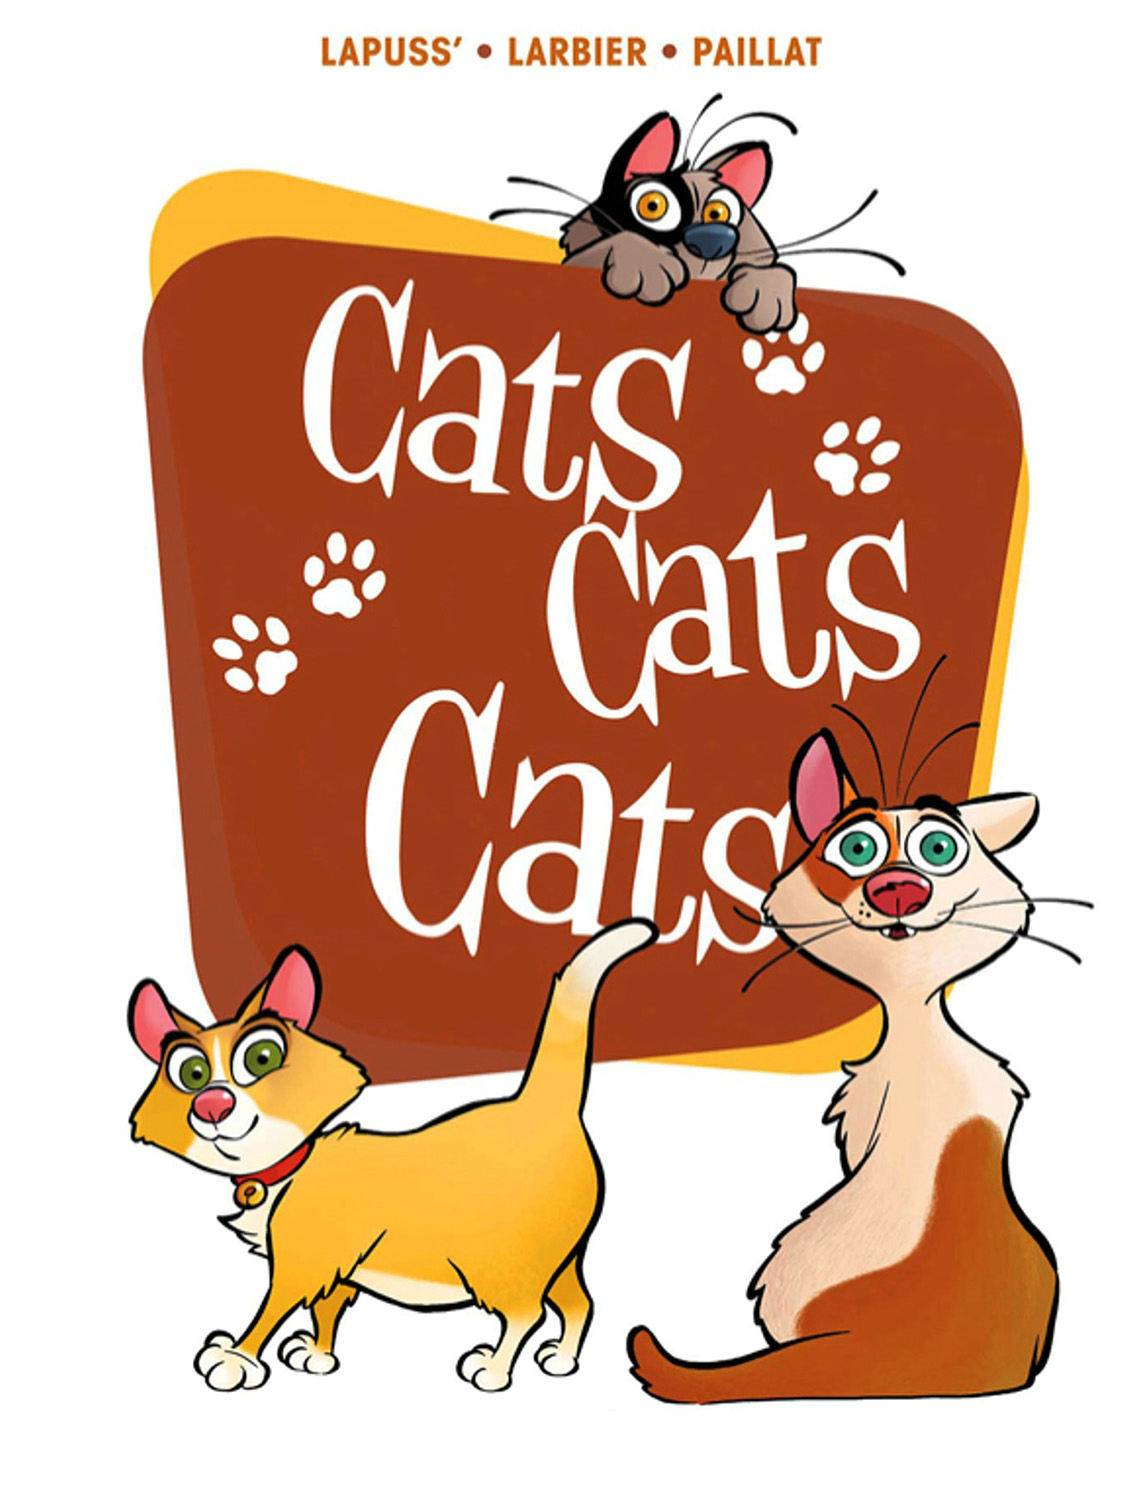 CATS CATS CATS GN